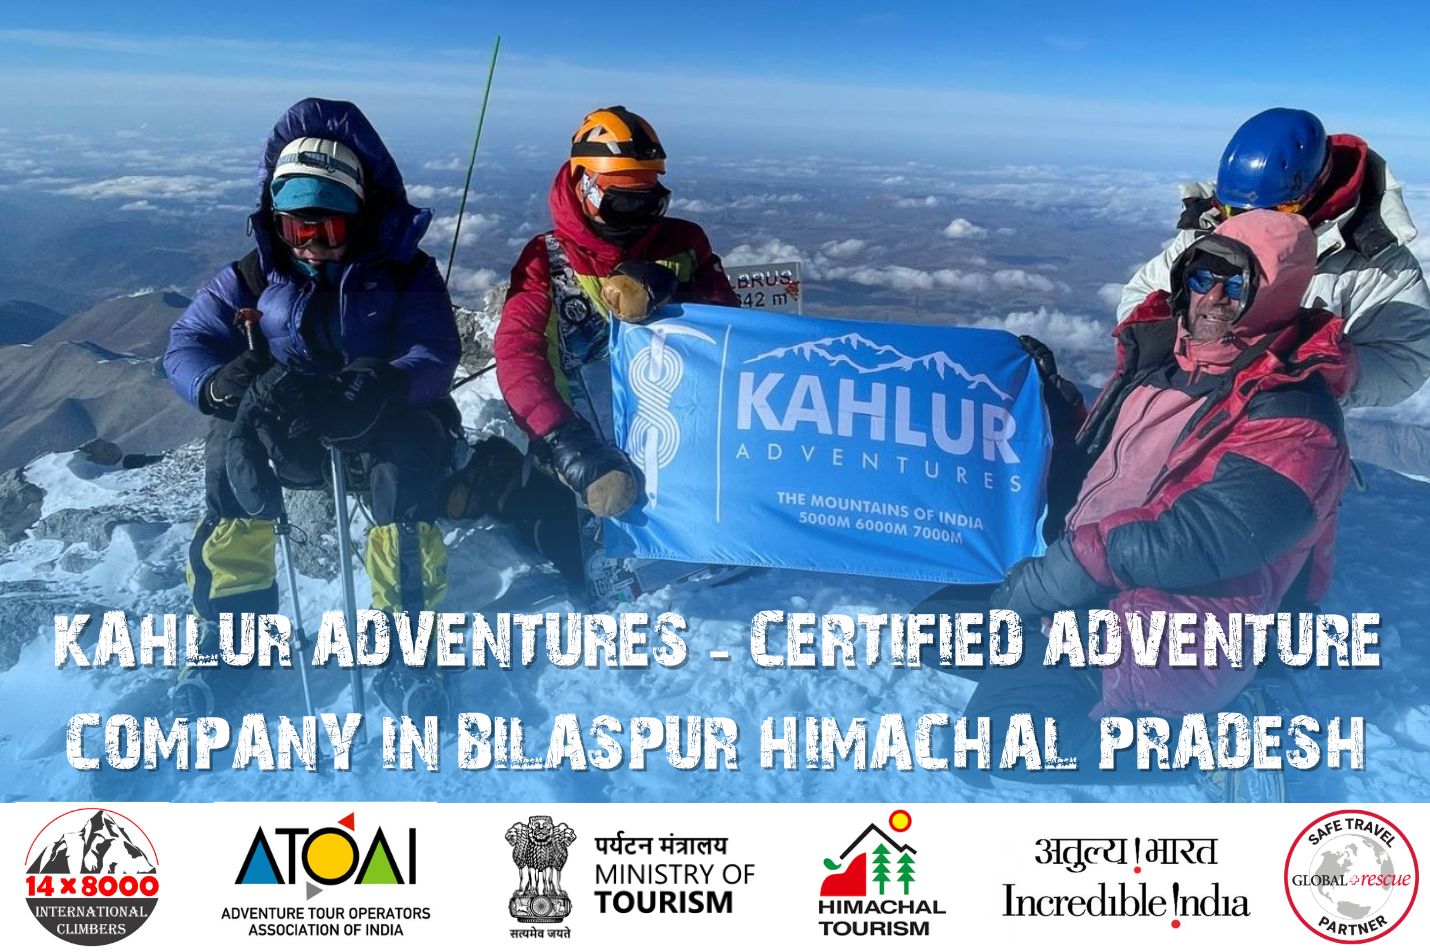 Kahlur adventures - Certified Adventure company in Bilaspur Himachal Pradesh - Kahlur Adventures